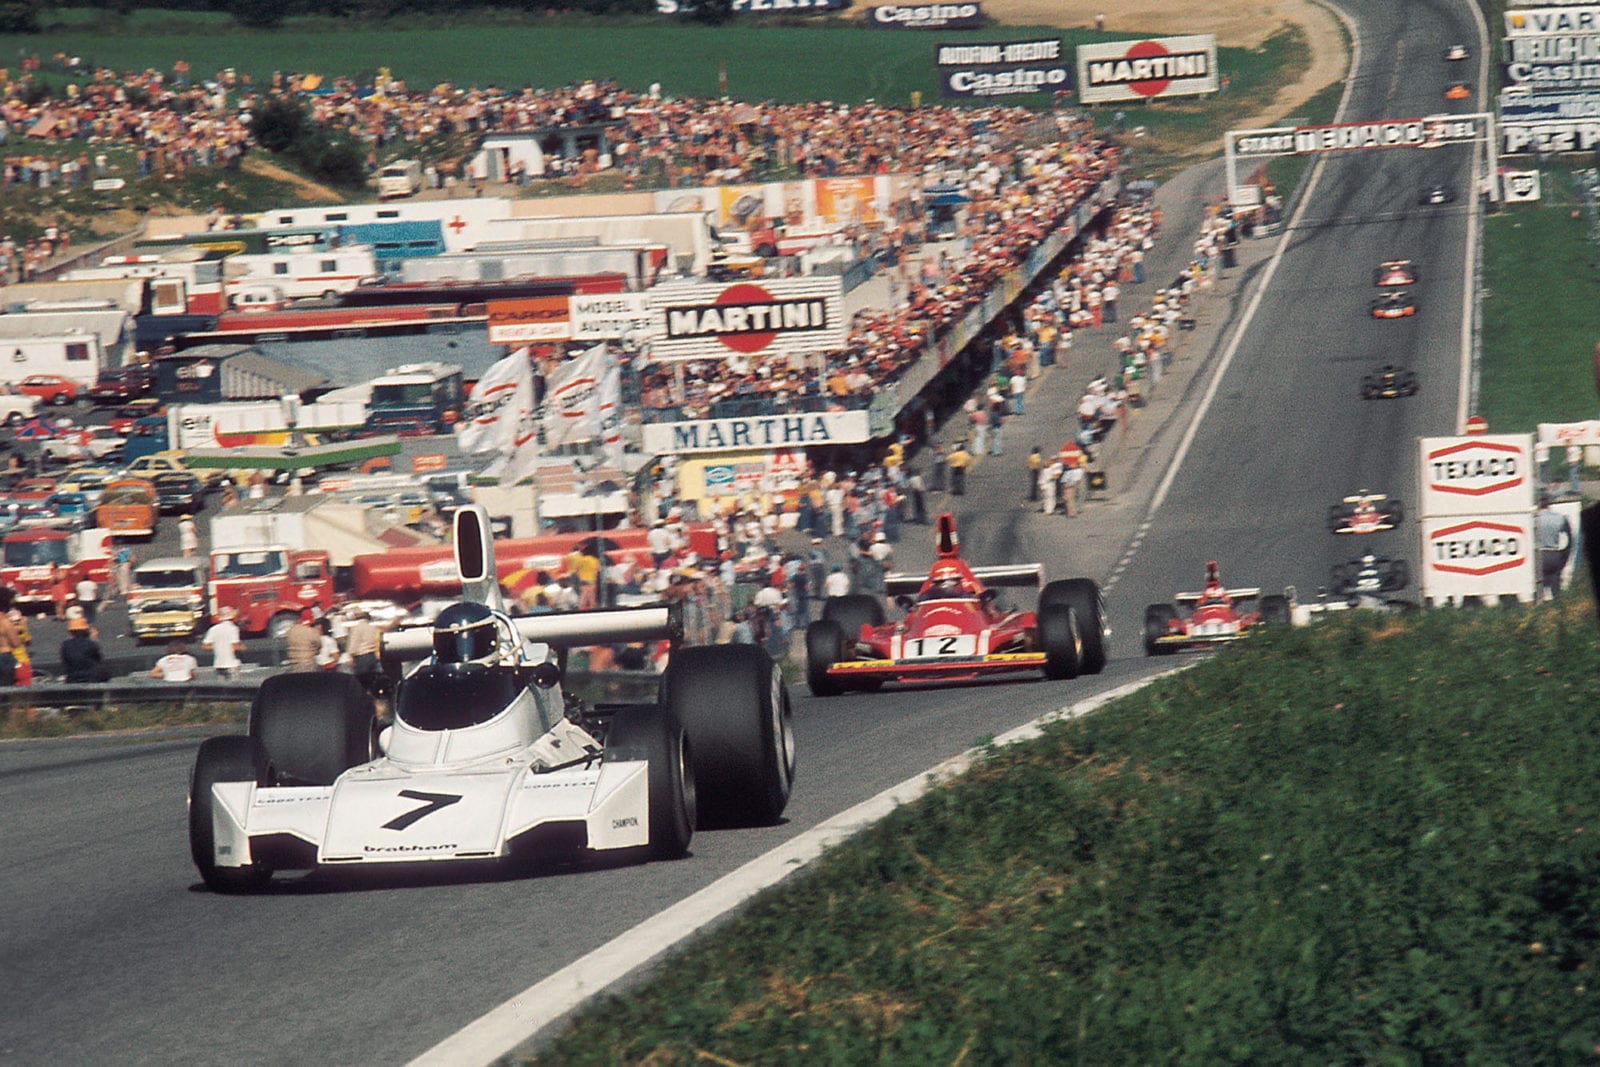 Carlos Reutemann (Brabham) leads Niki Lauda (Ferrari) up hill at the 1974 Austraian Grand Prix.